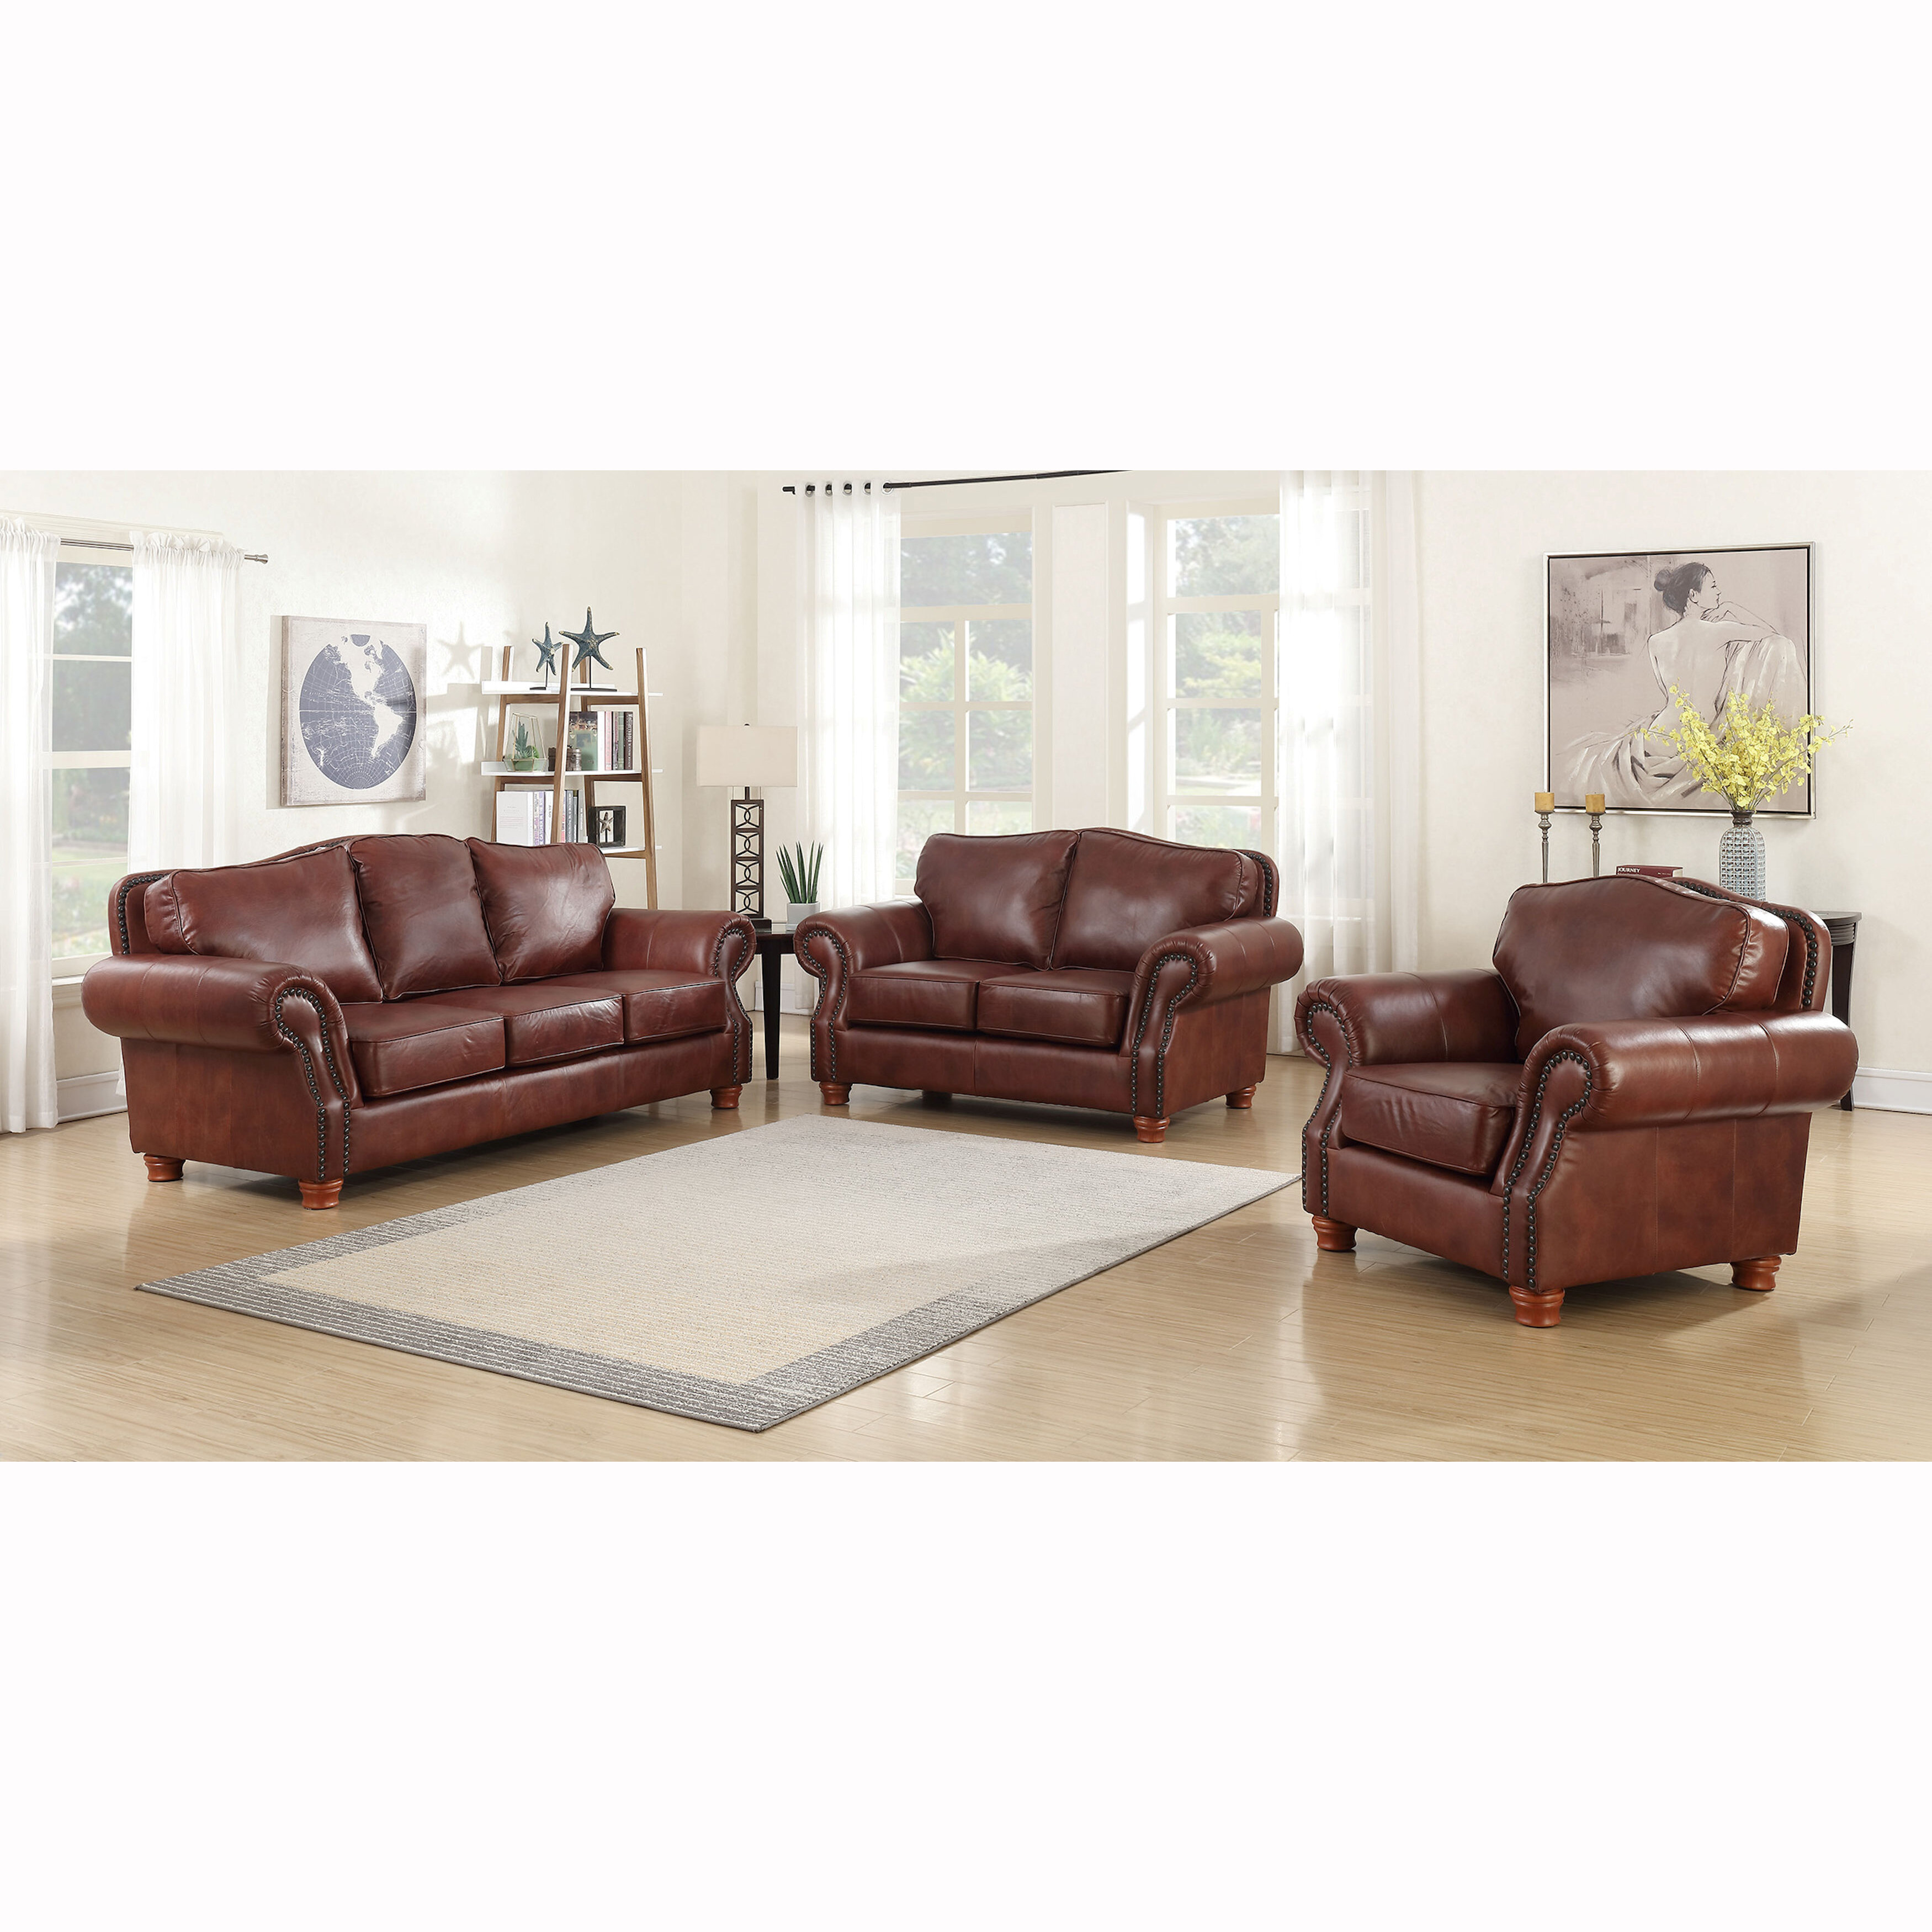 Canora Grey Vranduk 3 Piece Leather Living Room Set